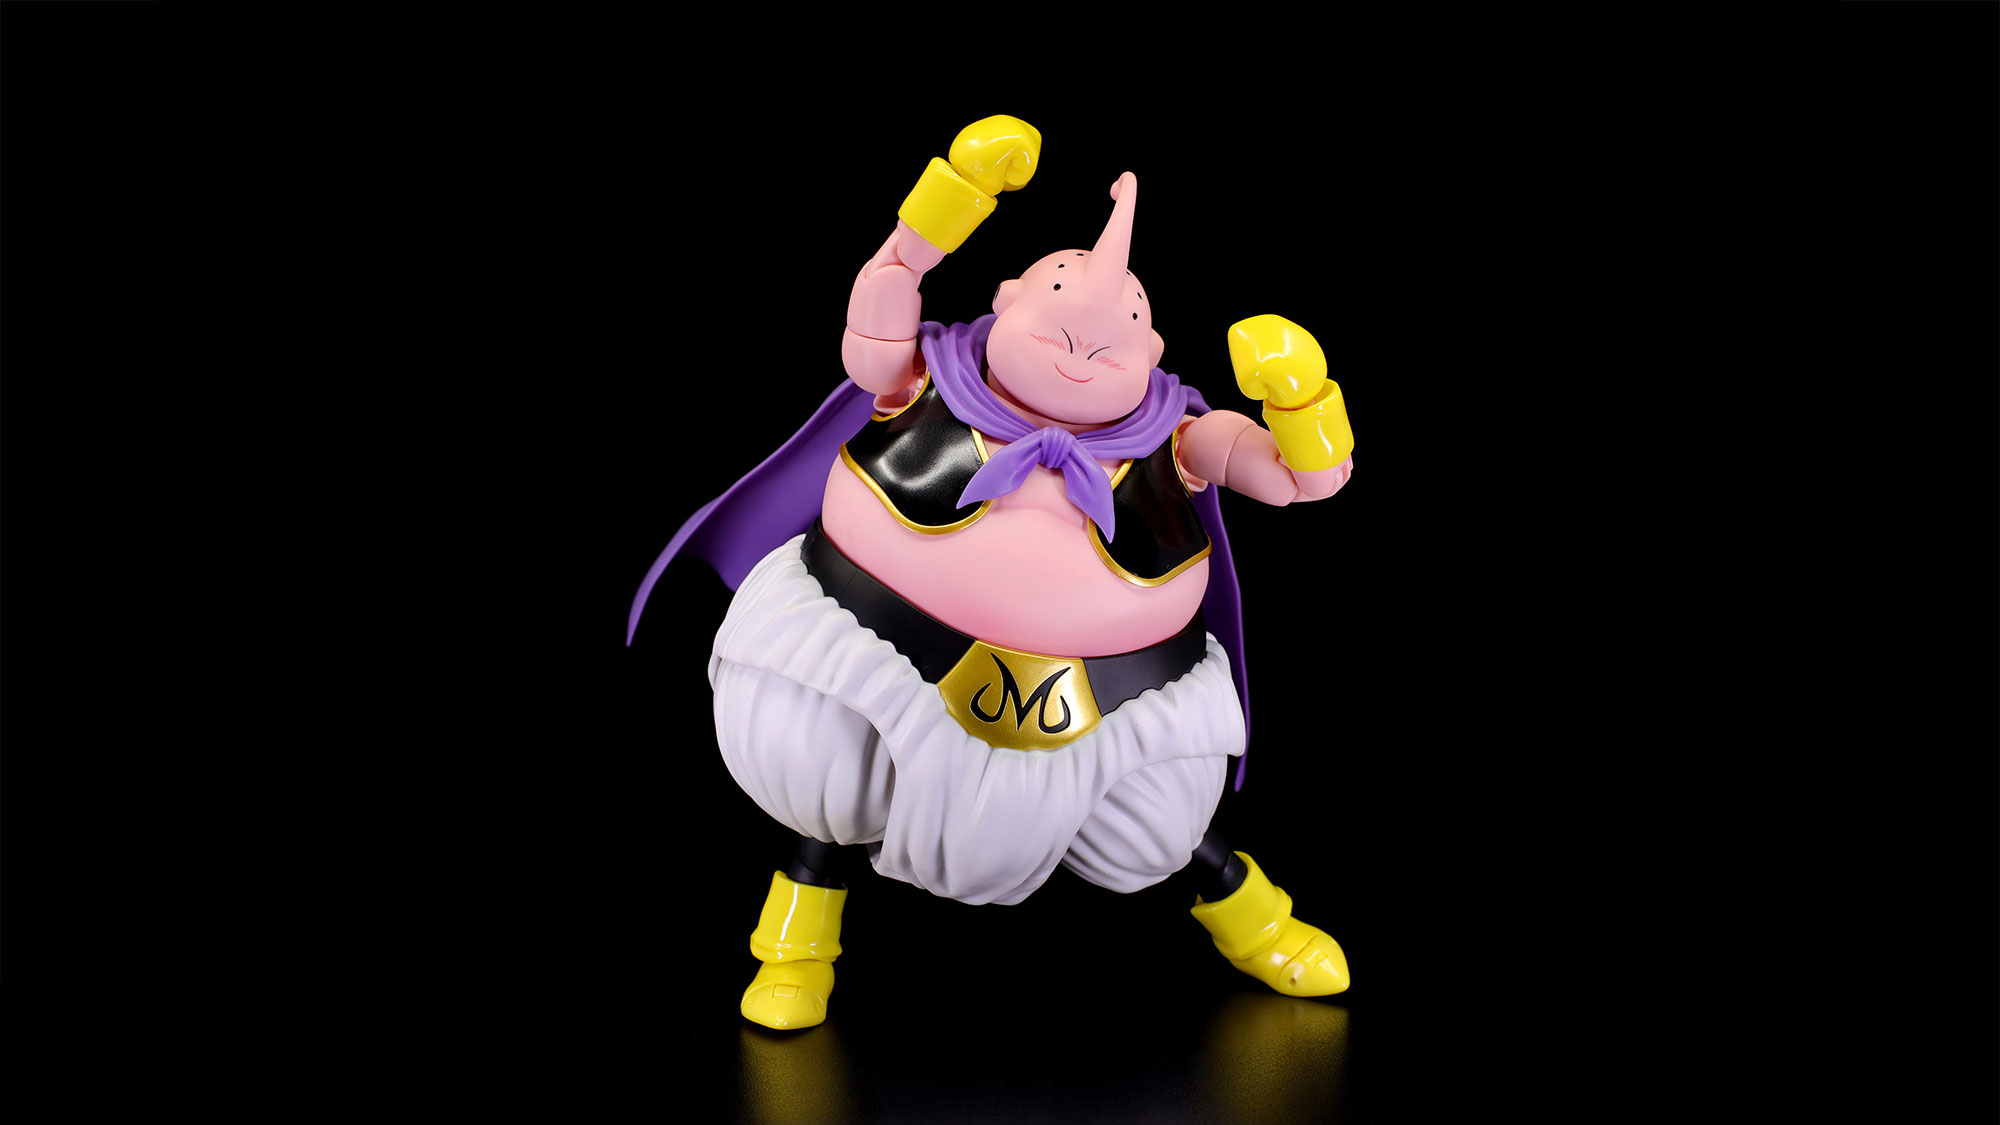 Figura Majin Boo - Event Exclusive - Dragon Ball Z - S.H. Figuarts - Bandai  - lojatamashii